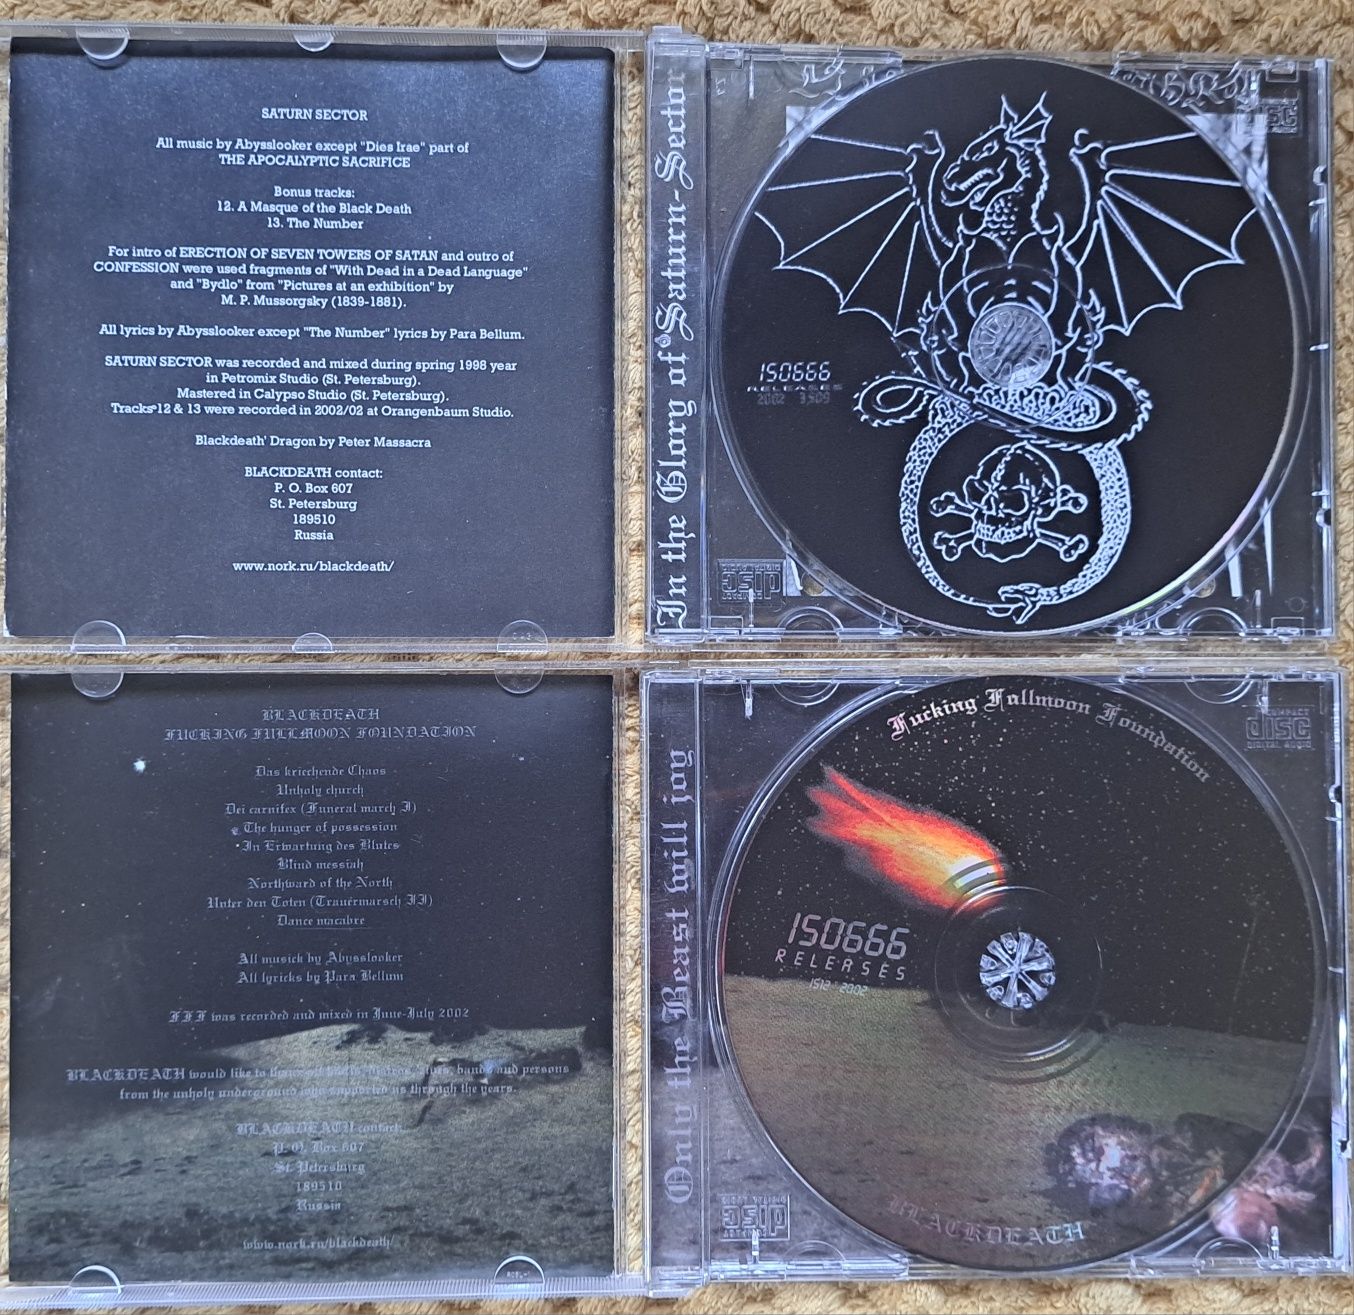 2 x CD BLACKDEATH - Black Metal